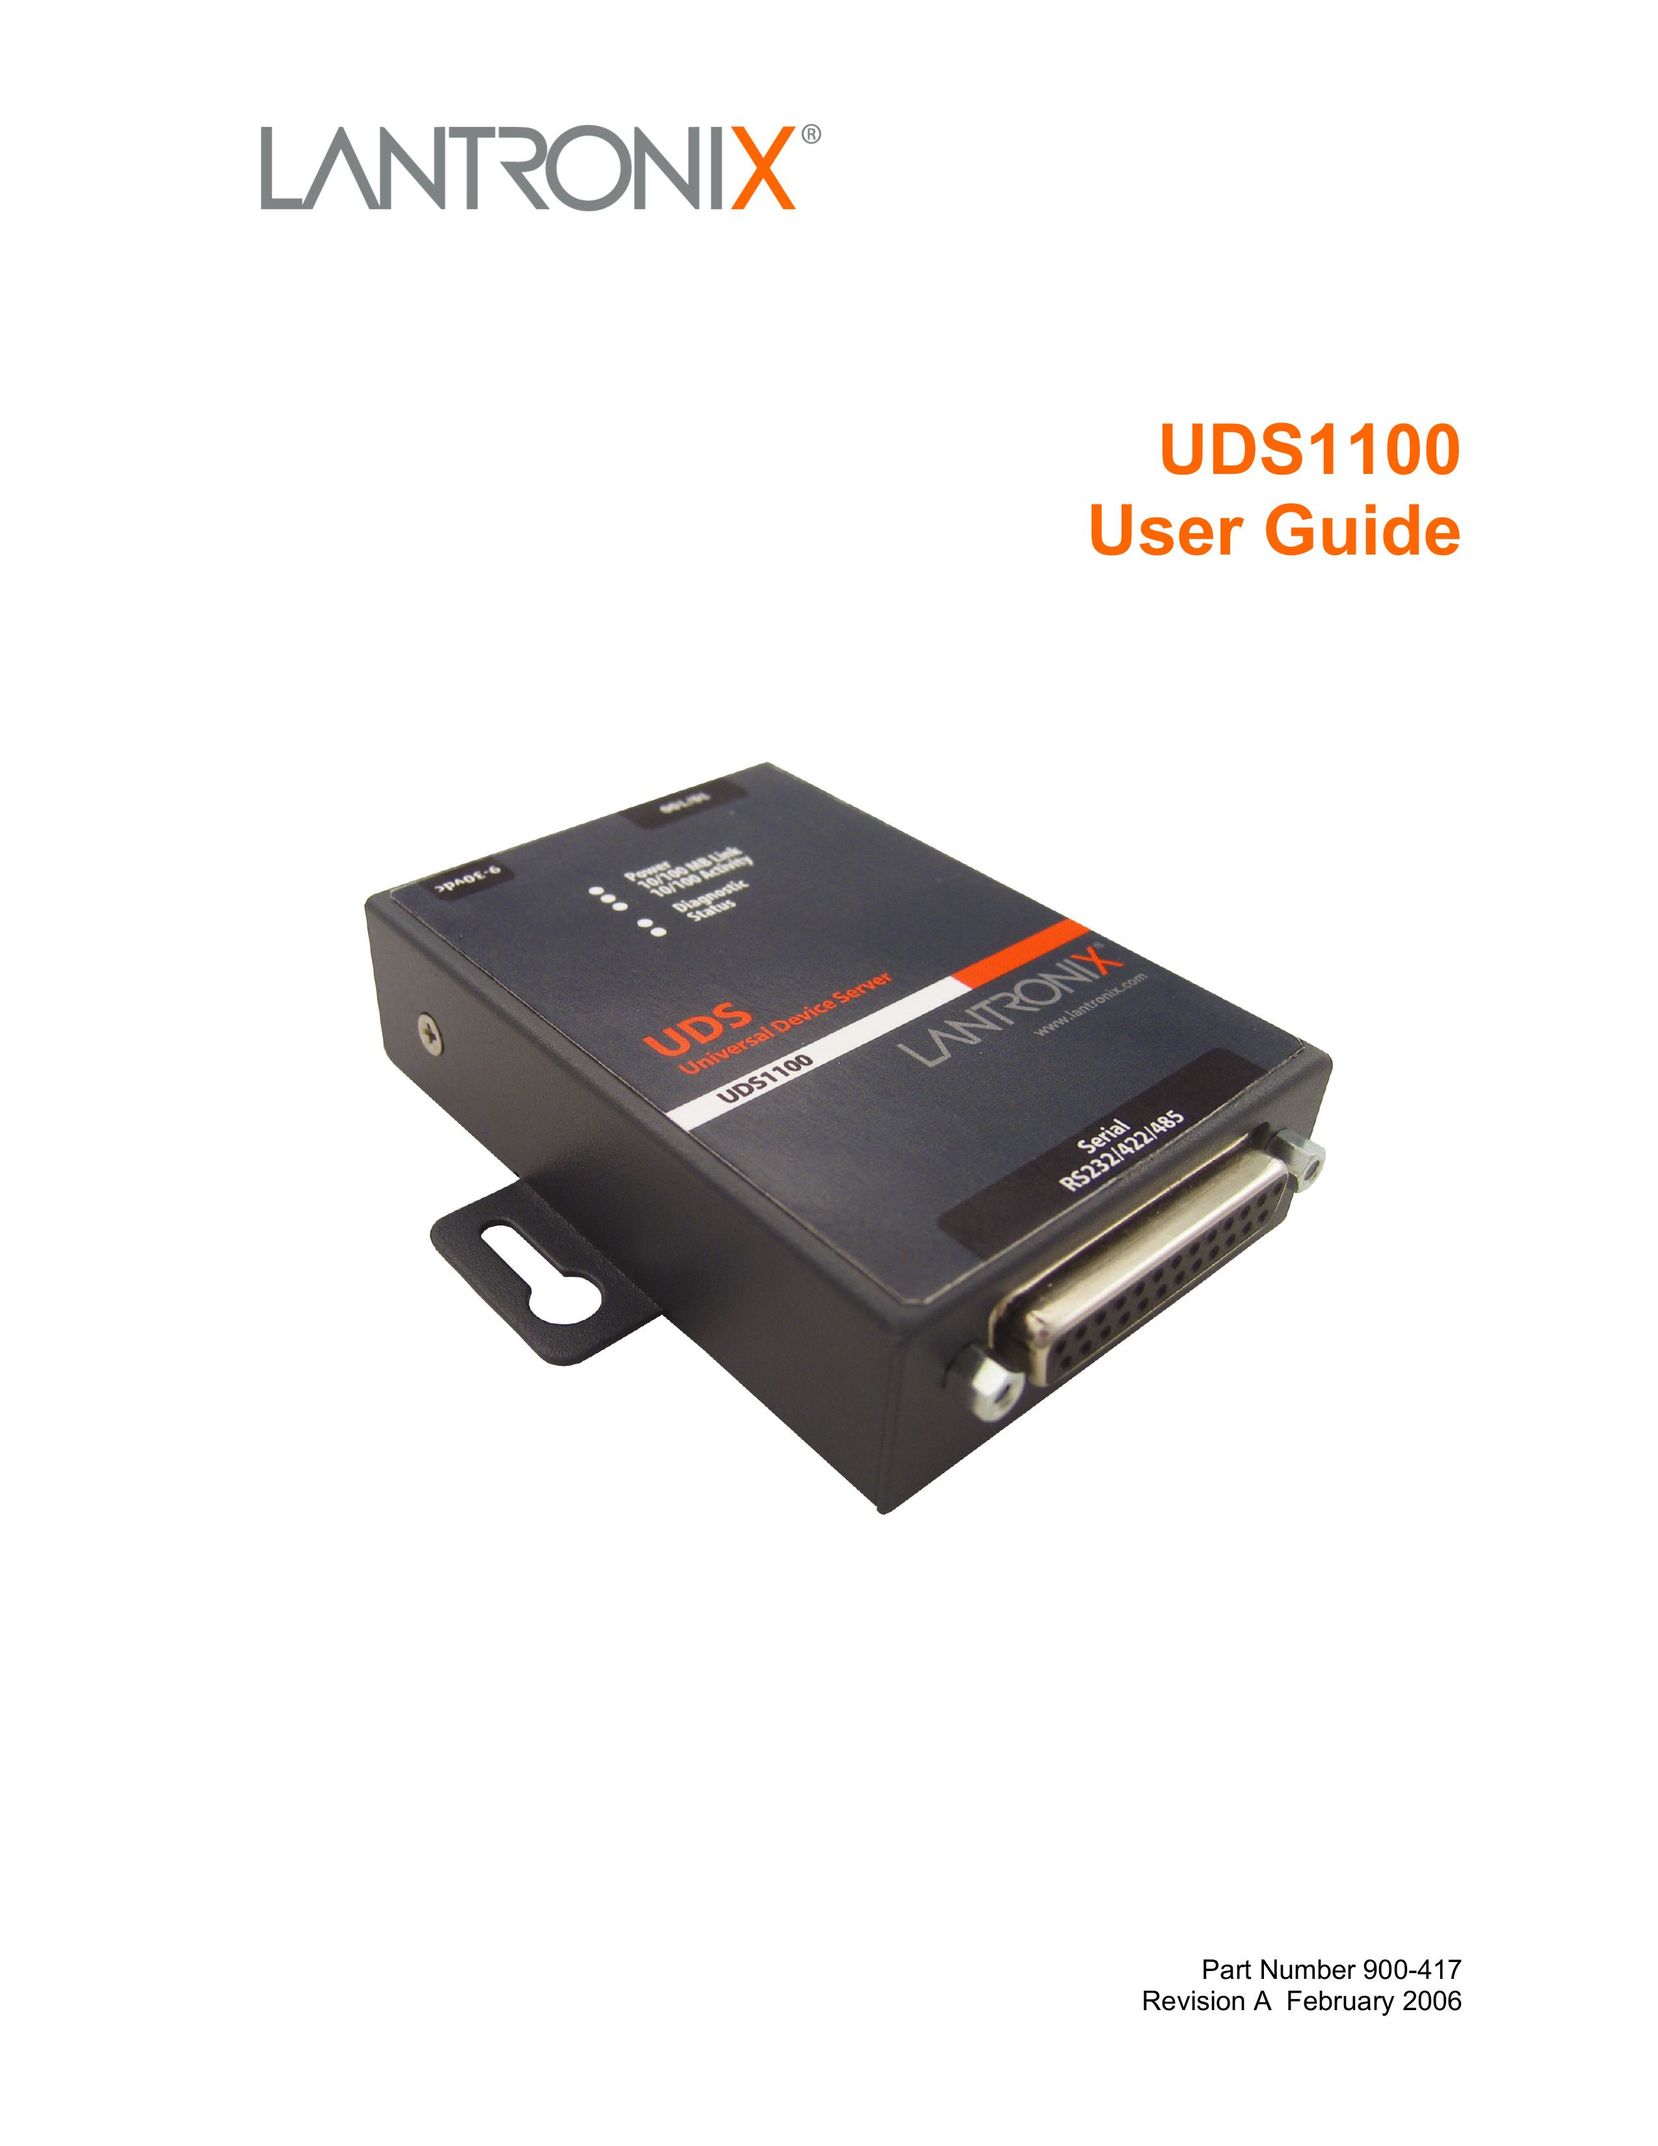 Lantronix UDS1100 Network Card User Manual